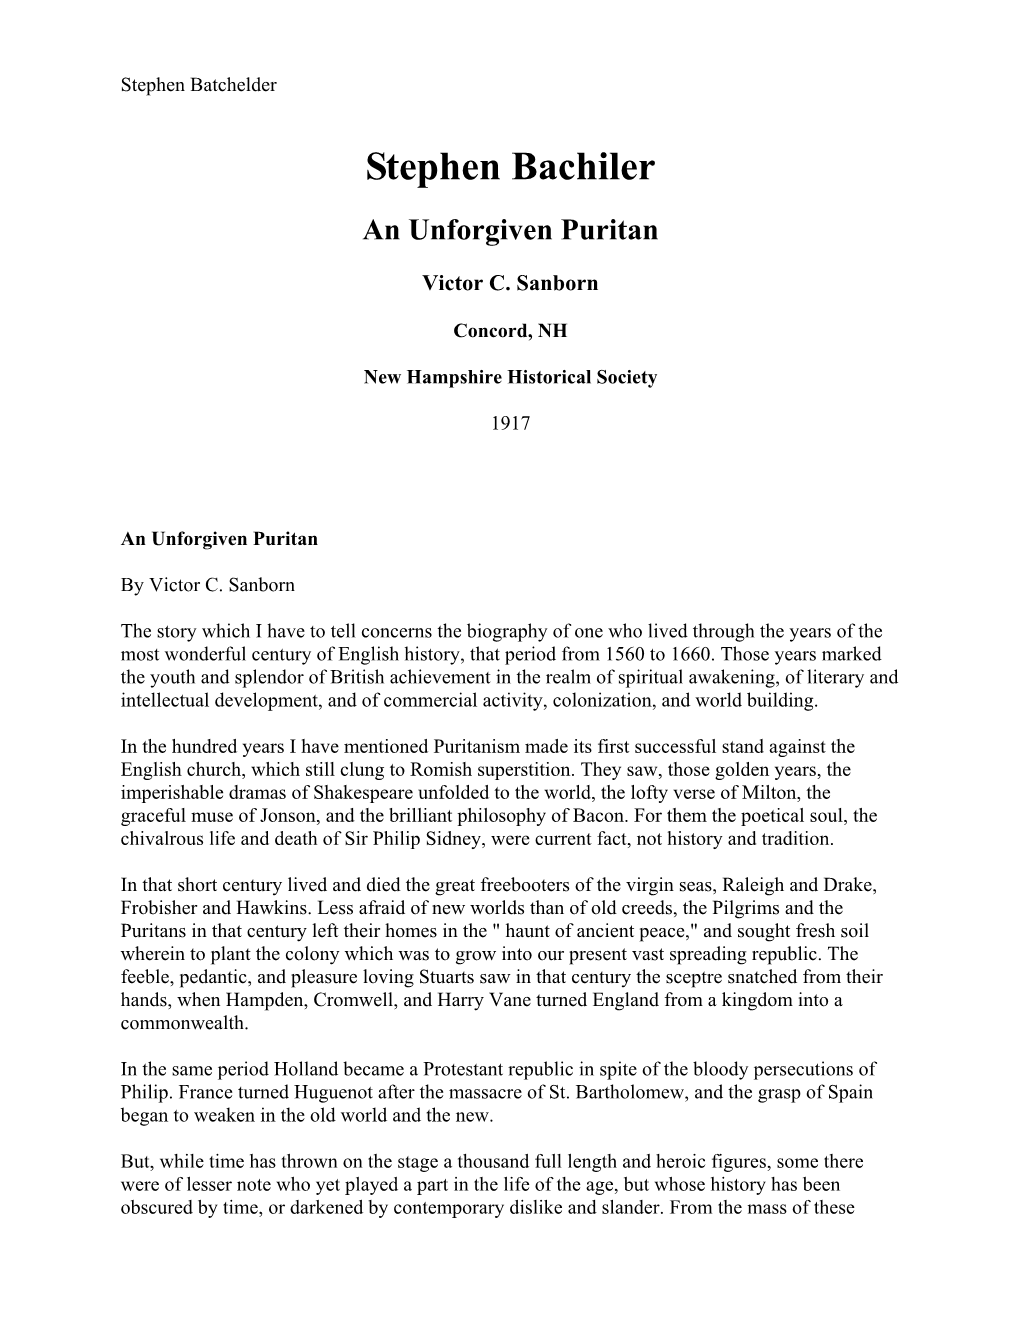 Bachiler, Stephen, an Unforgiven Puritan